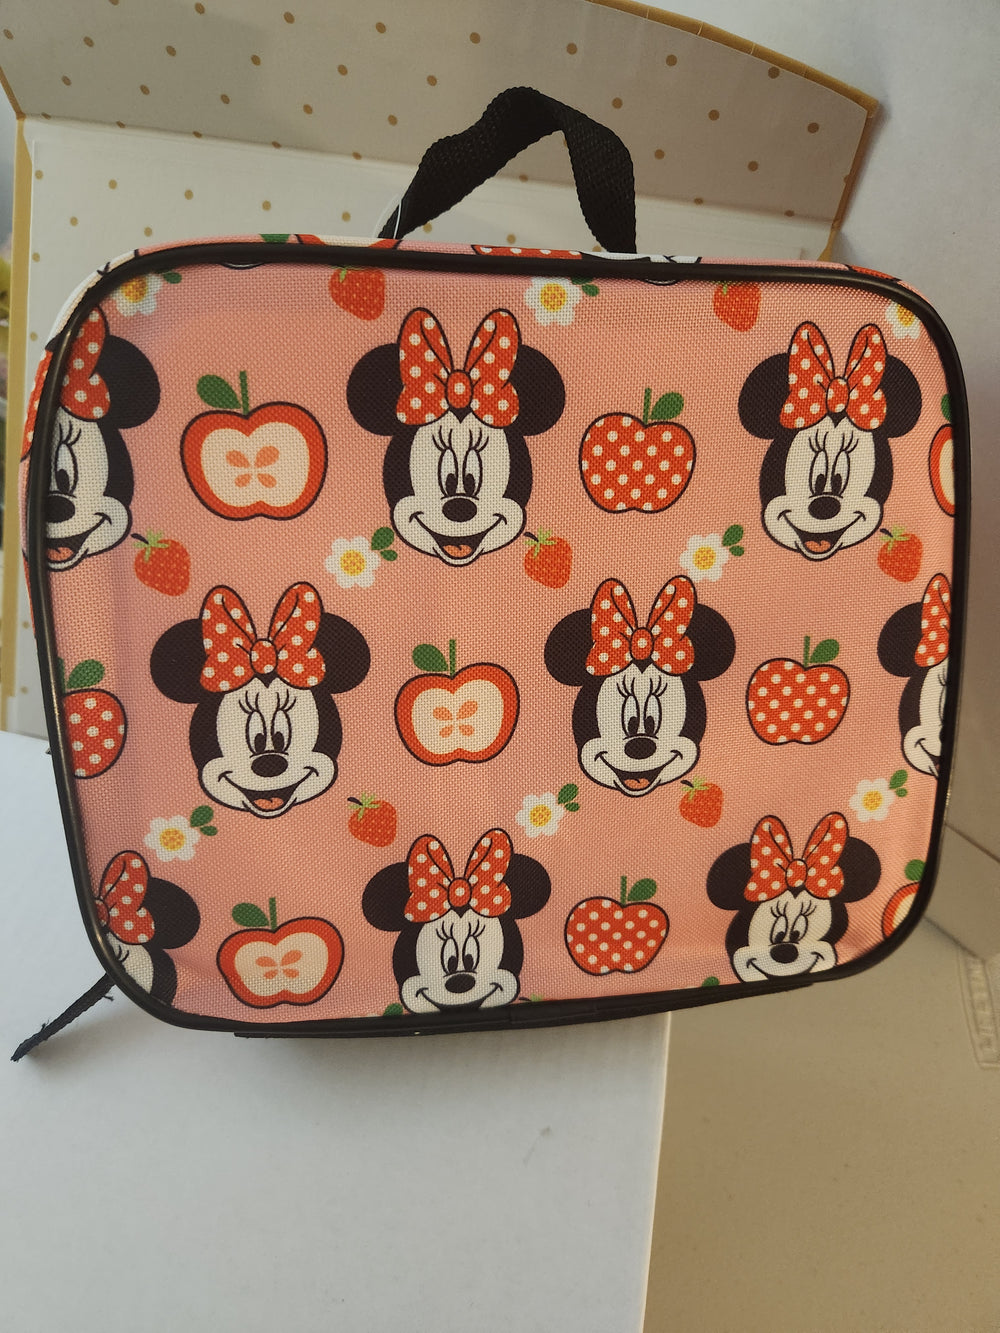 Disney Minnie Mouse Apple/Strawberry Lunch Bag, SquareDesign, Zipper Closure